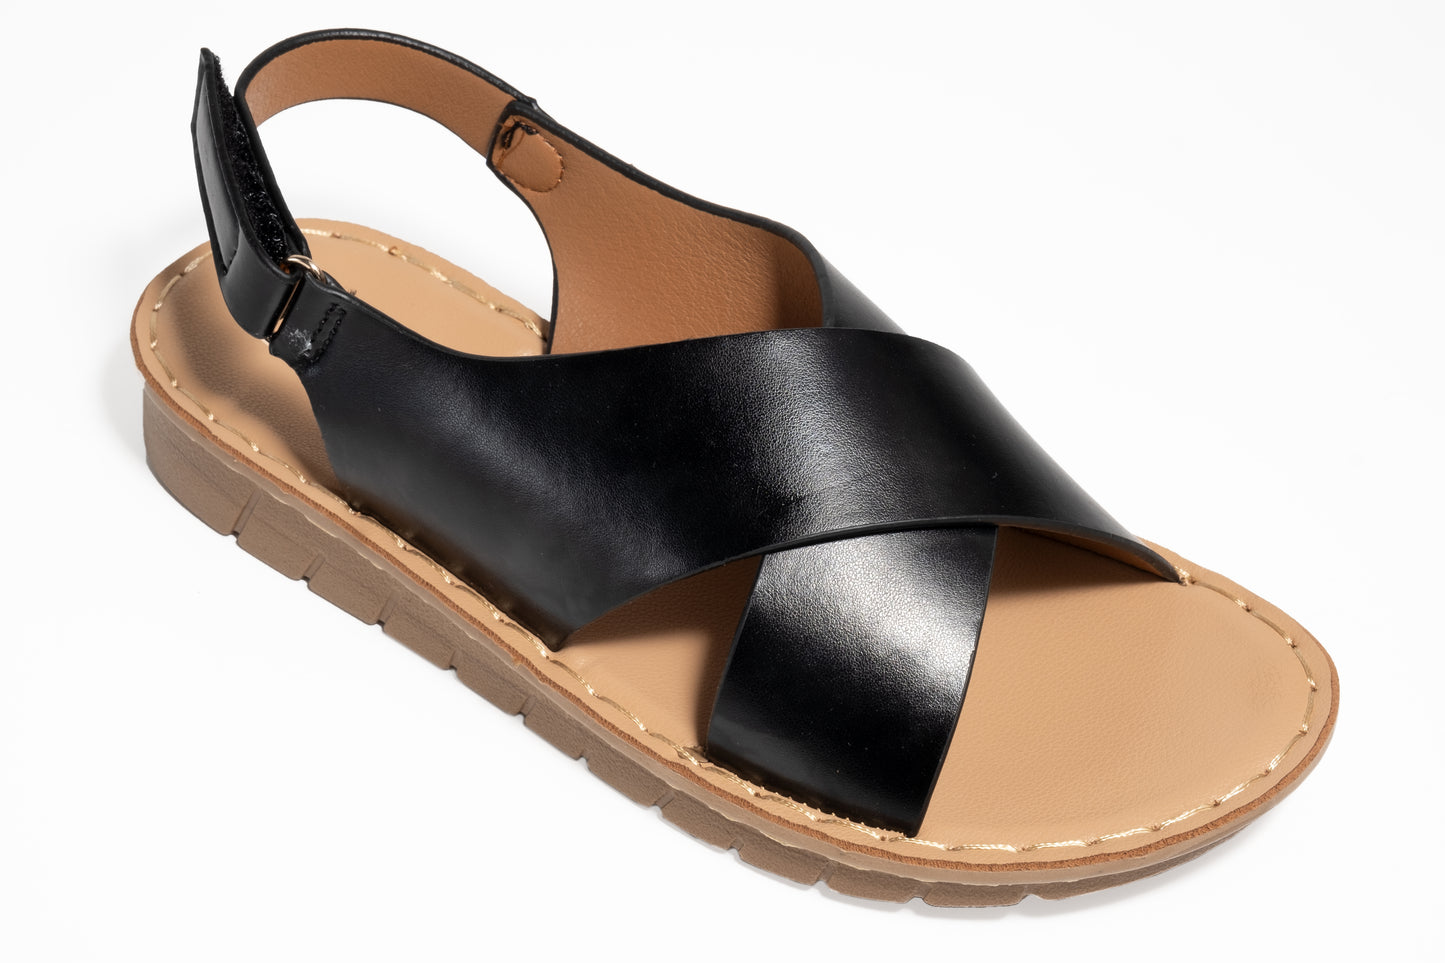 Comfort-5L Chic and Comfortable Crisscross Velcro Sandal